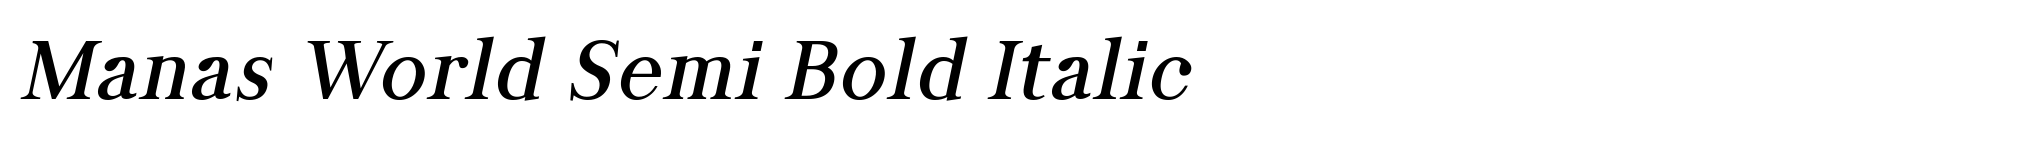 Manas World Semi Bold Italic image